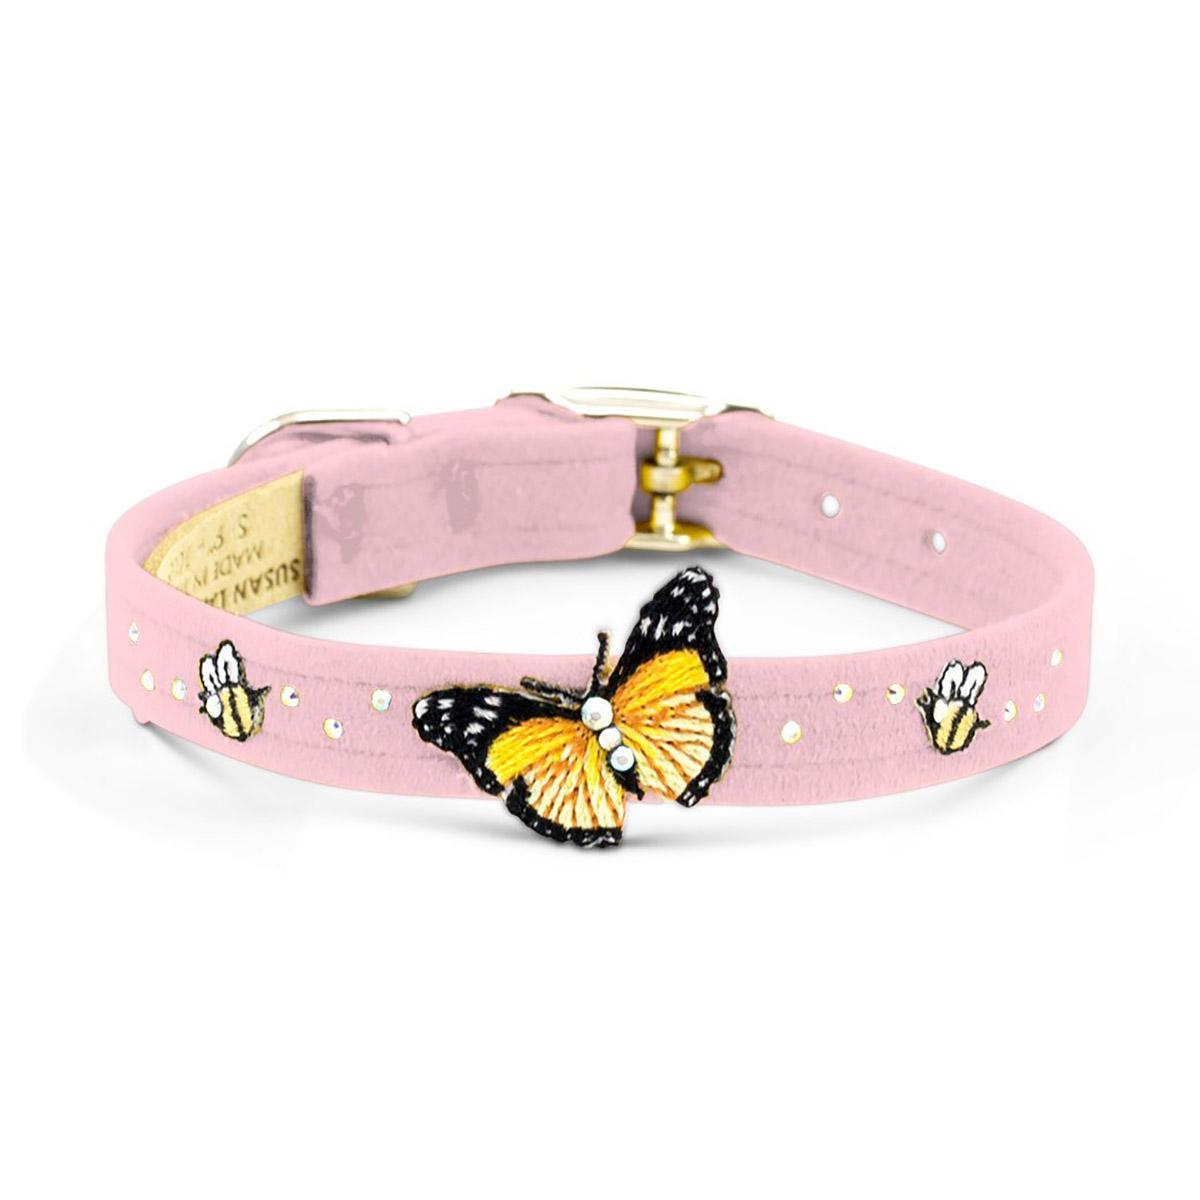 Butterflies & Bees Dog Collar by Susan Lanci - Puppy Pink